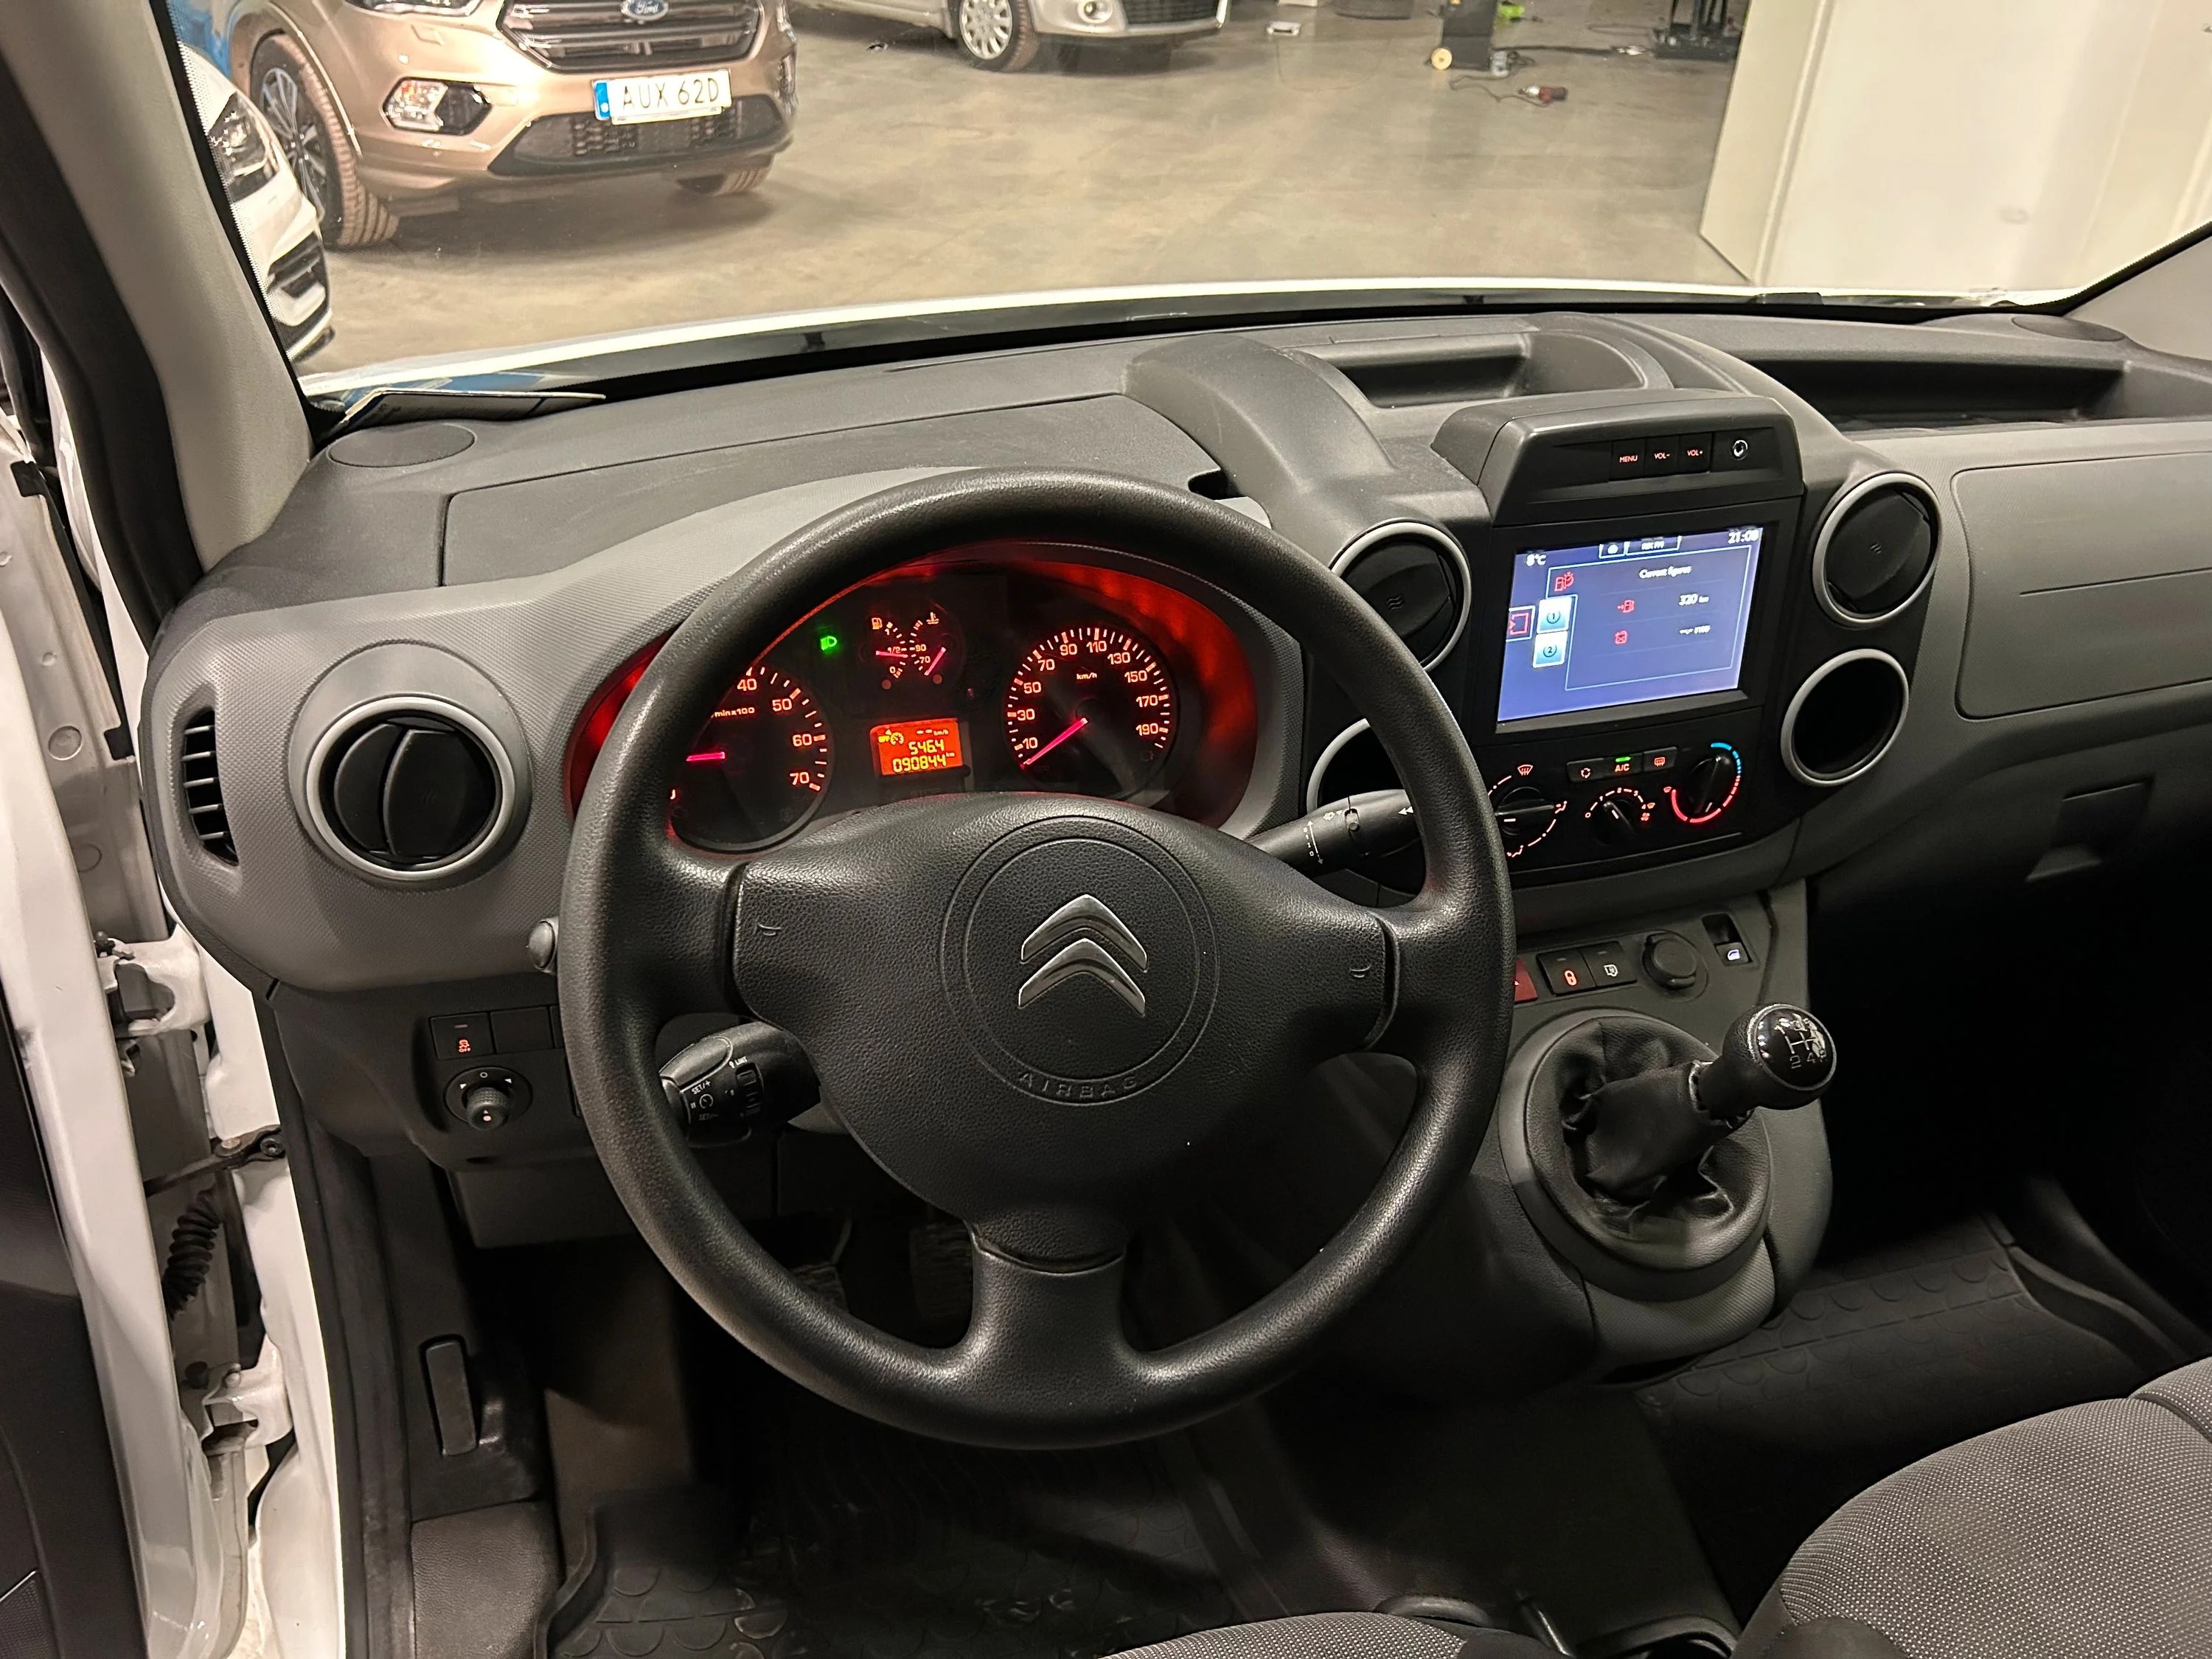 Citroën Berlingo Van 1.6 BlueHDi Manuell, 75hk, 2017